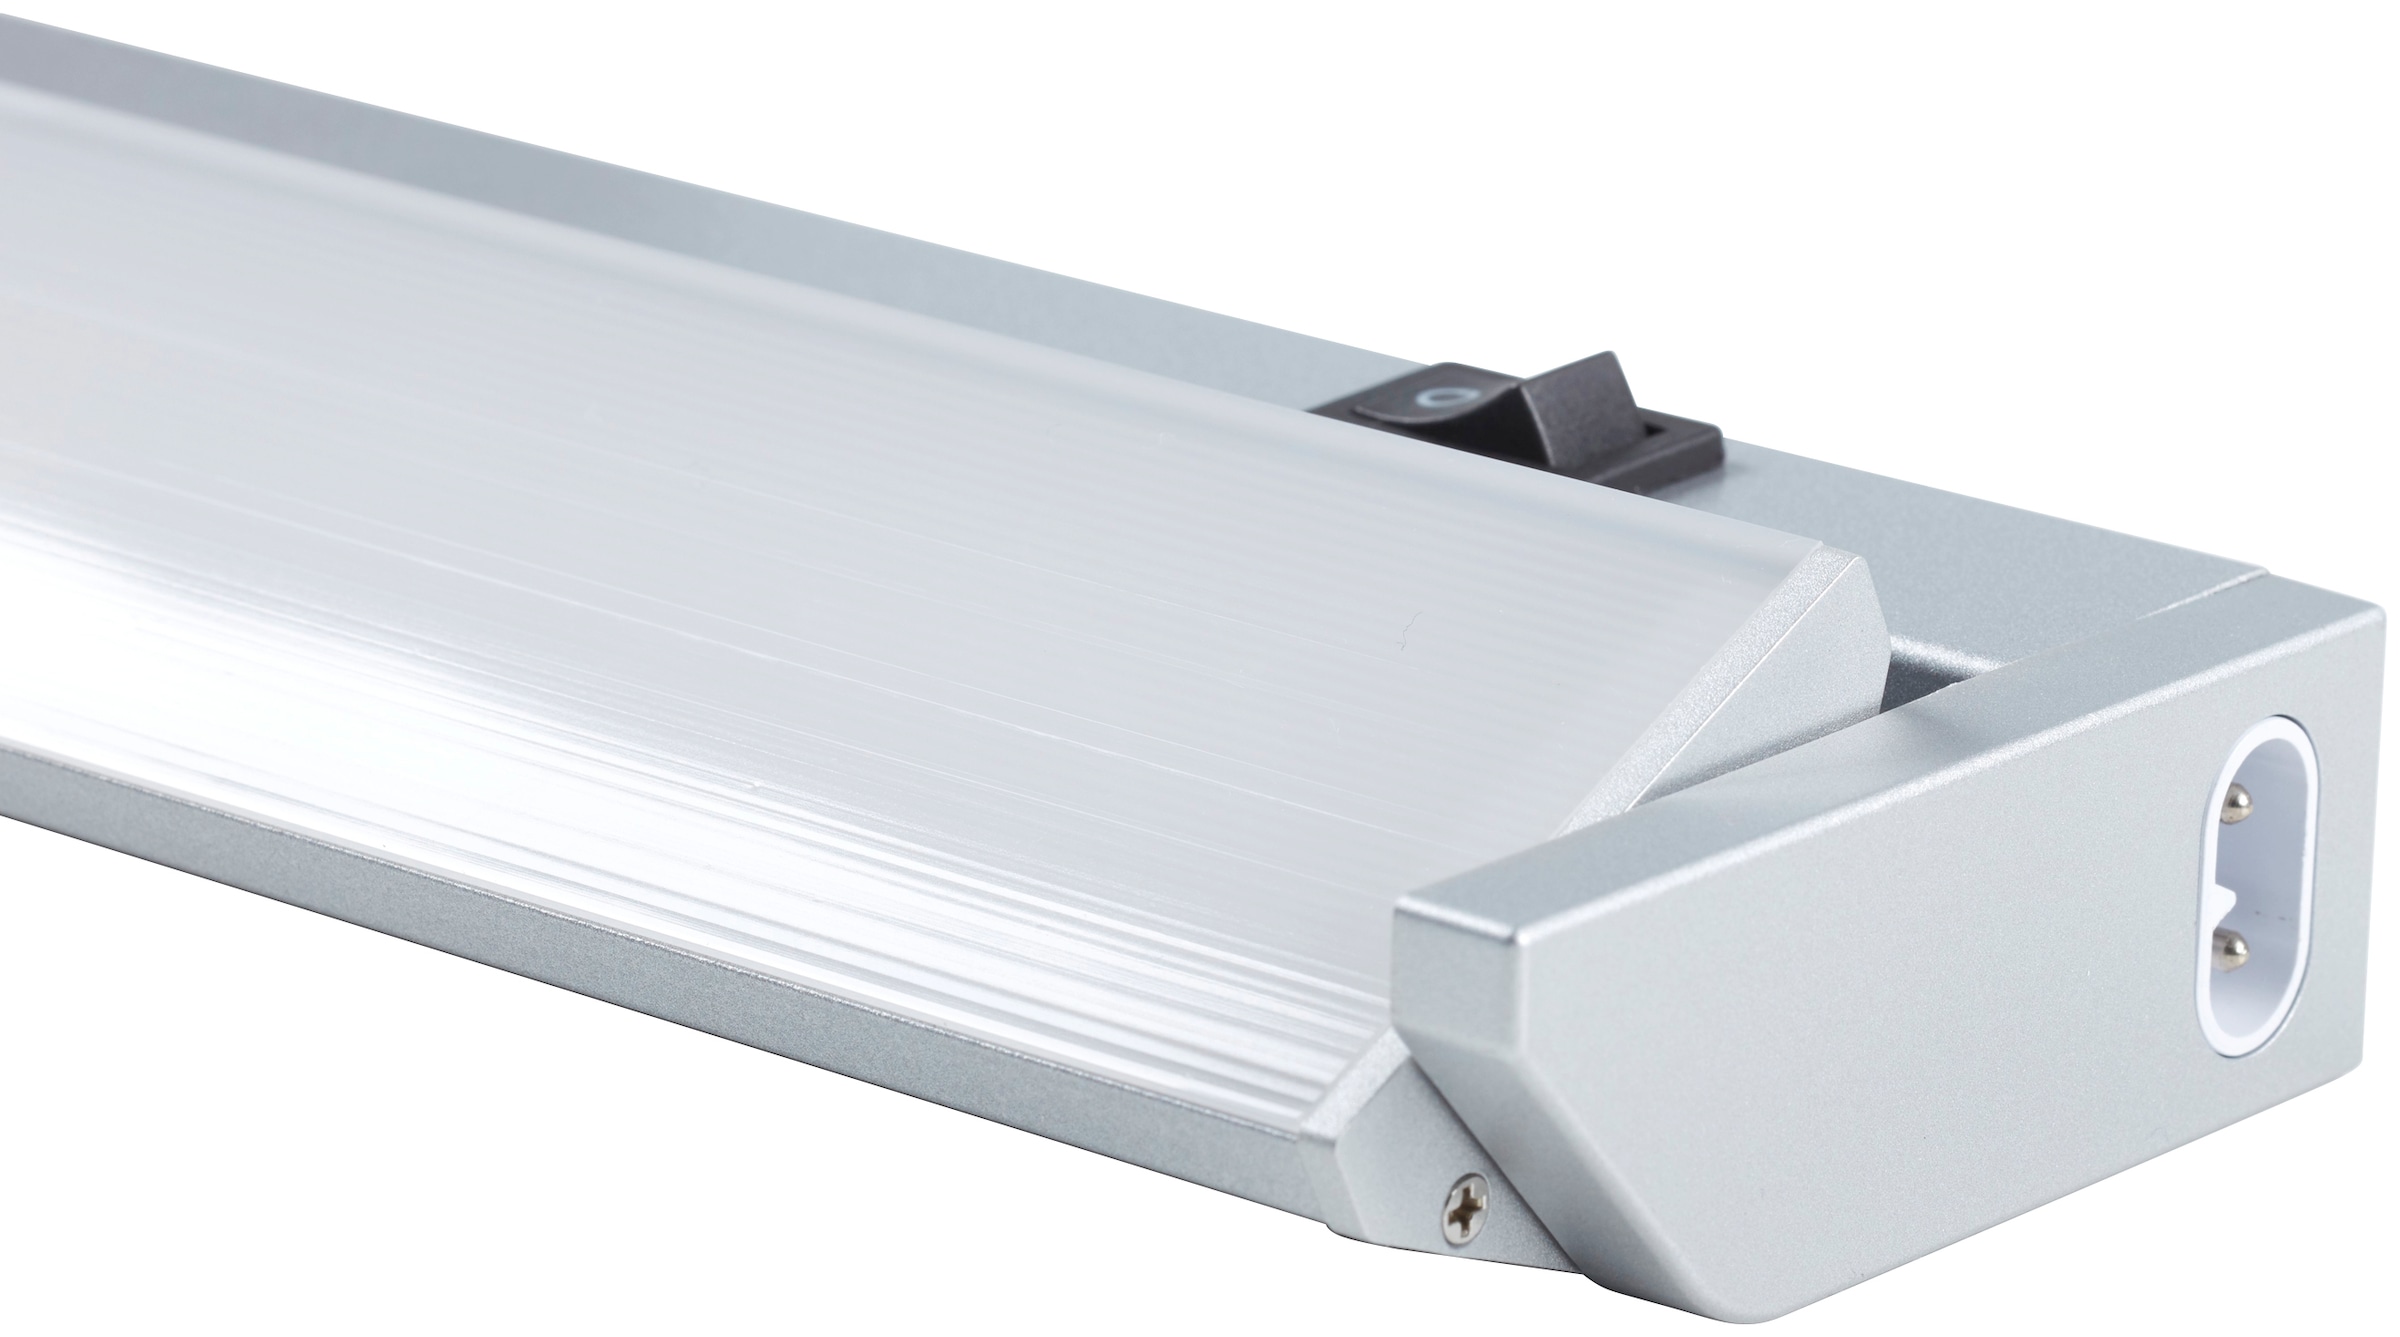 Loevschall LED Unterbauleuchte »LED Striplight, Unterbauleuchte Küche«, Leuchtmittel LED-Modul | LED fest integriert, Lichtleiste LED, Unterschrank Beleuchtung Küche